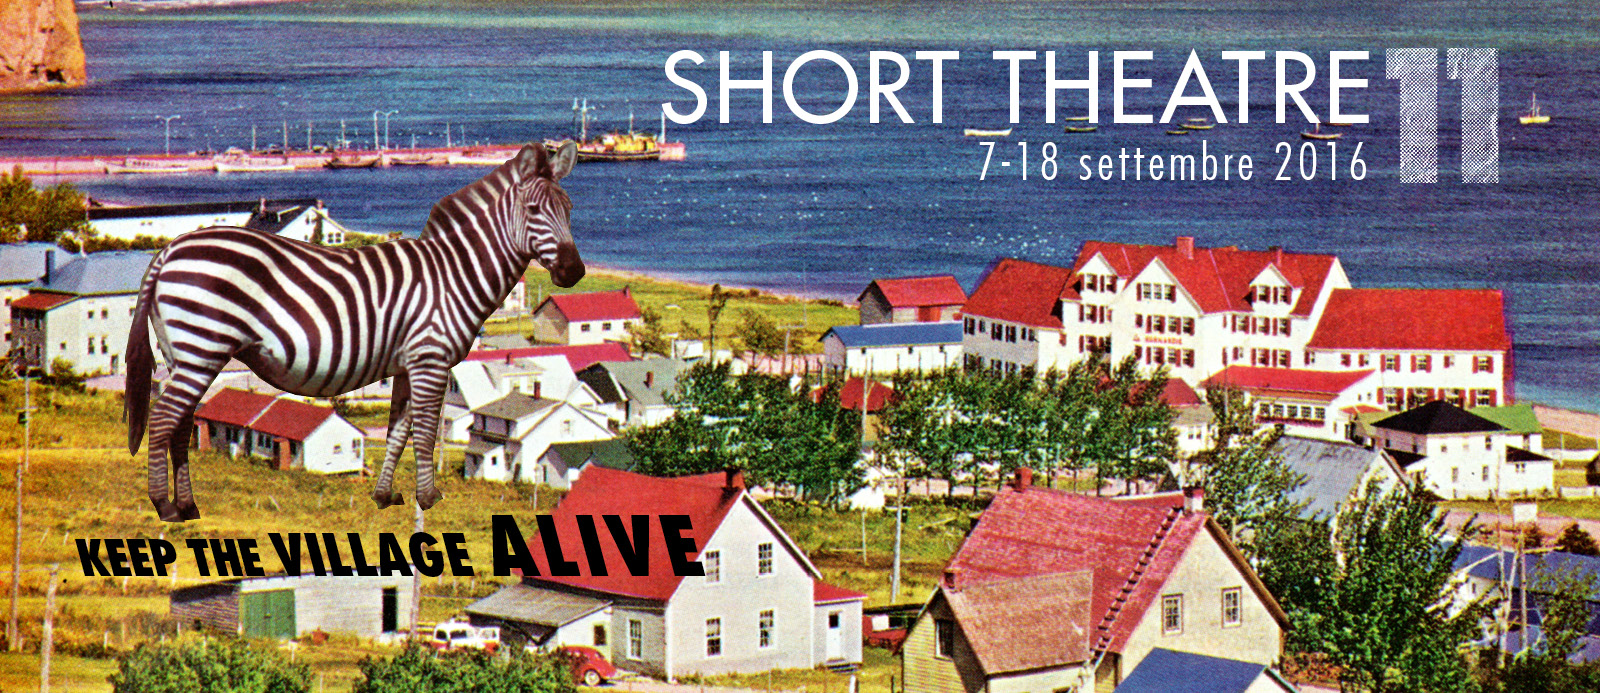 Short Theatre 11 #shortheatre11